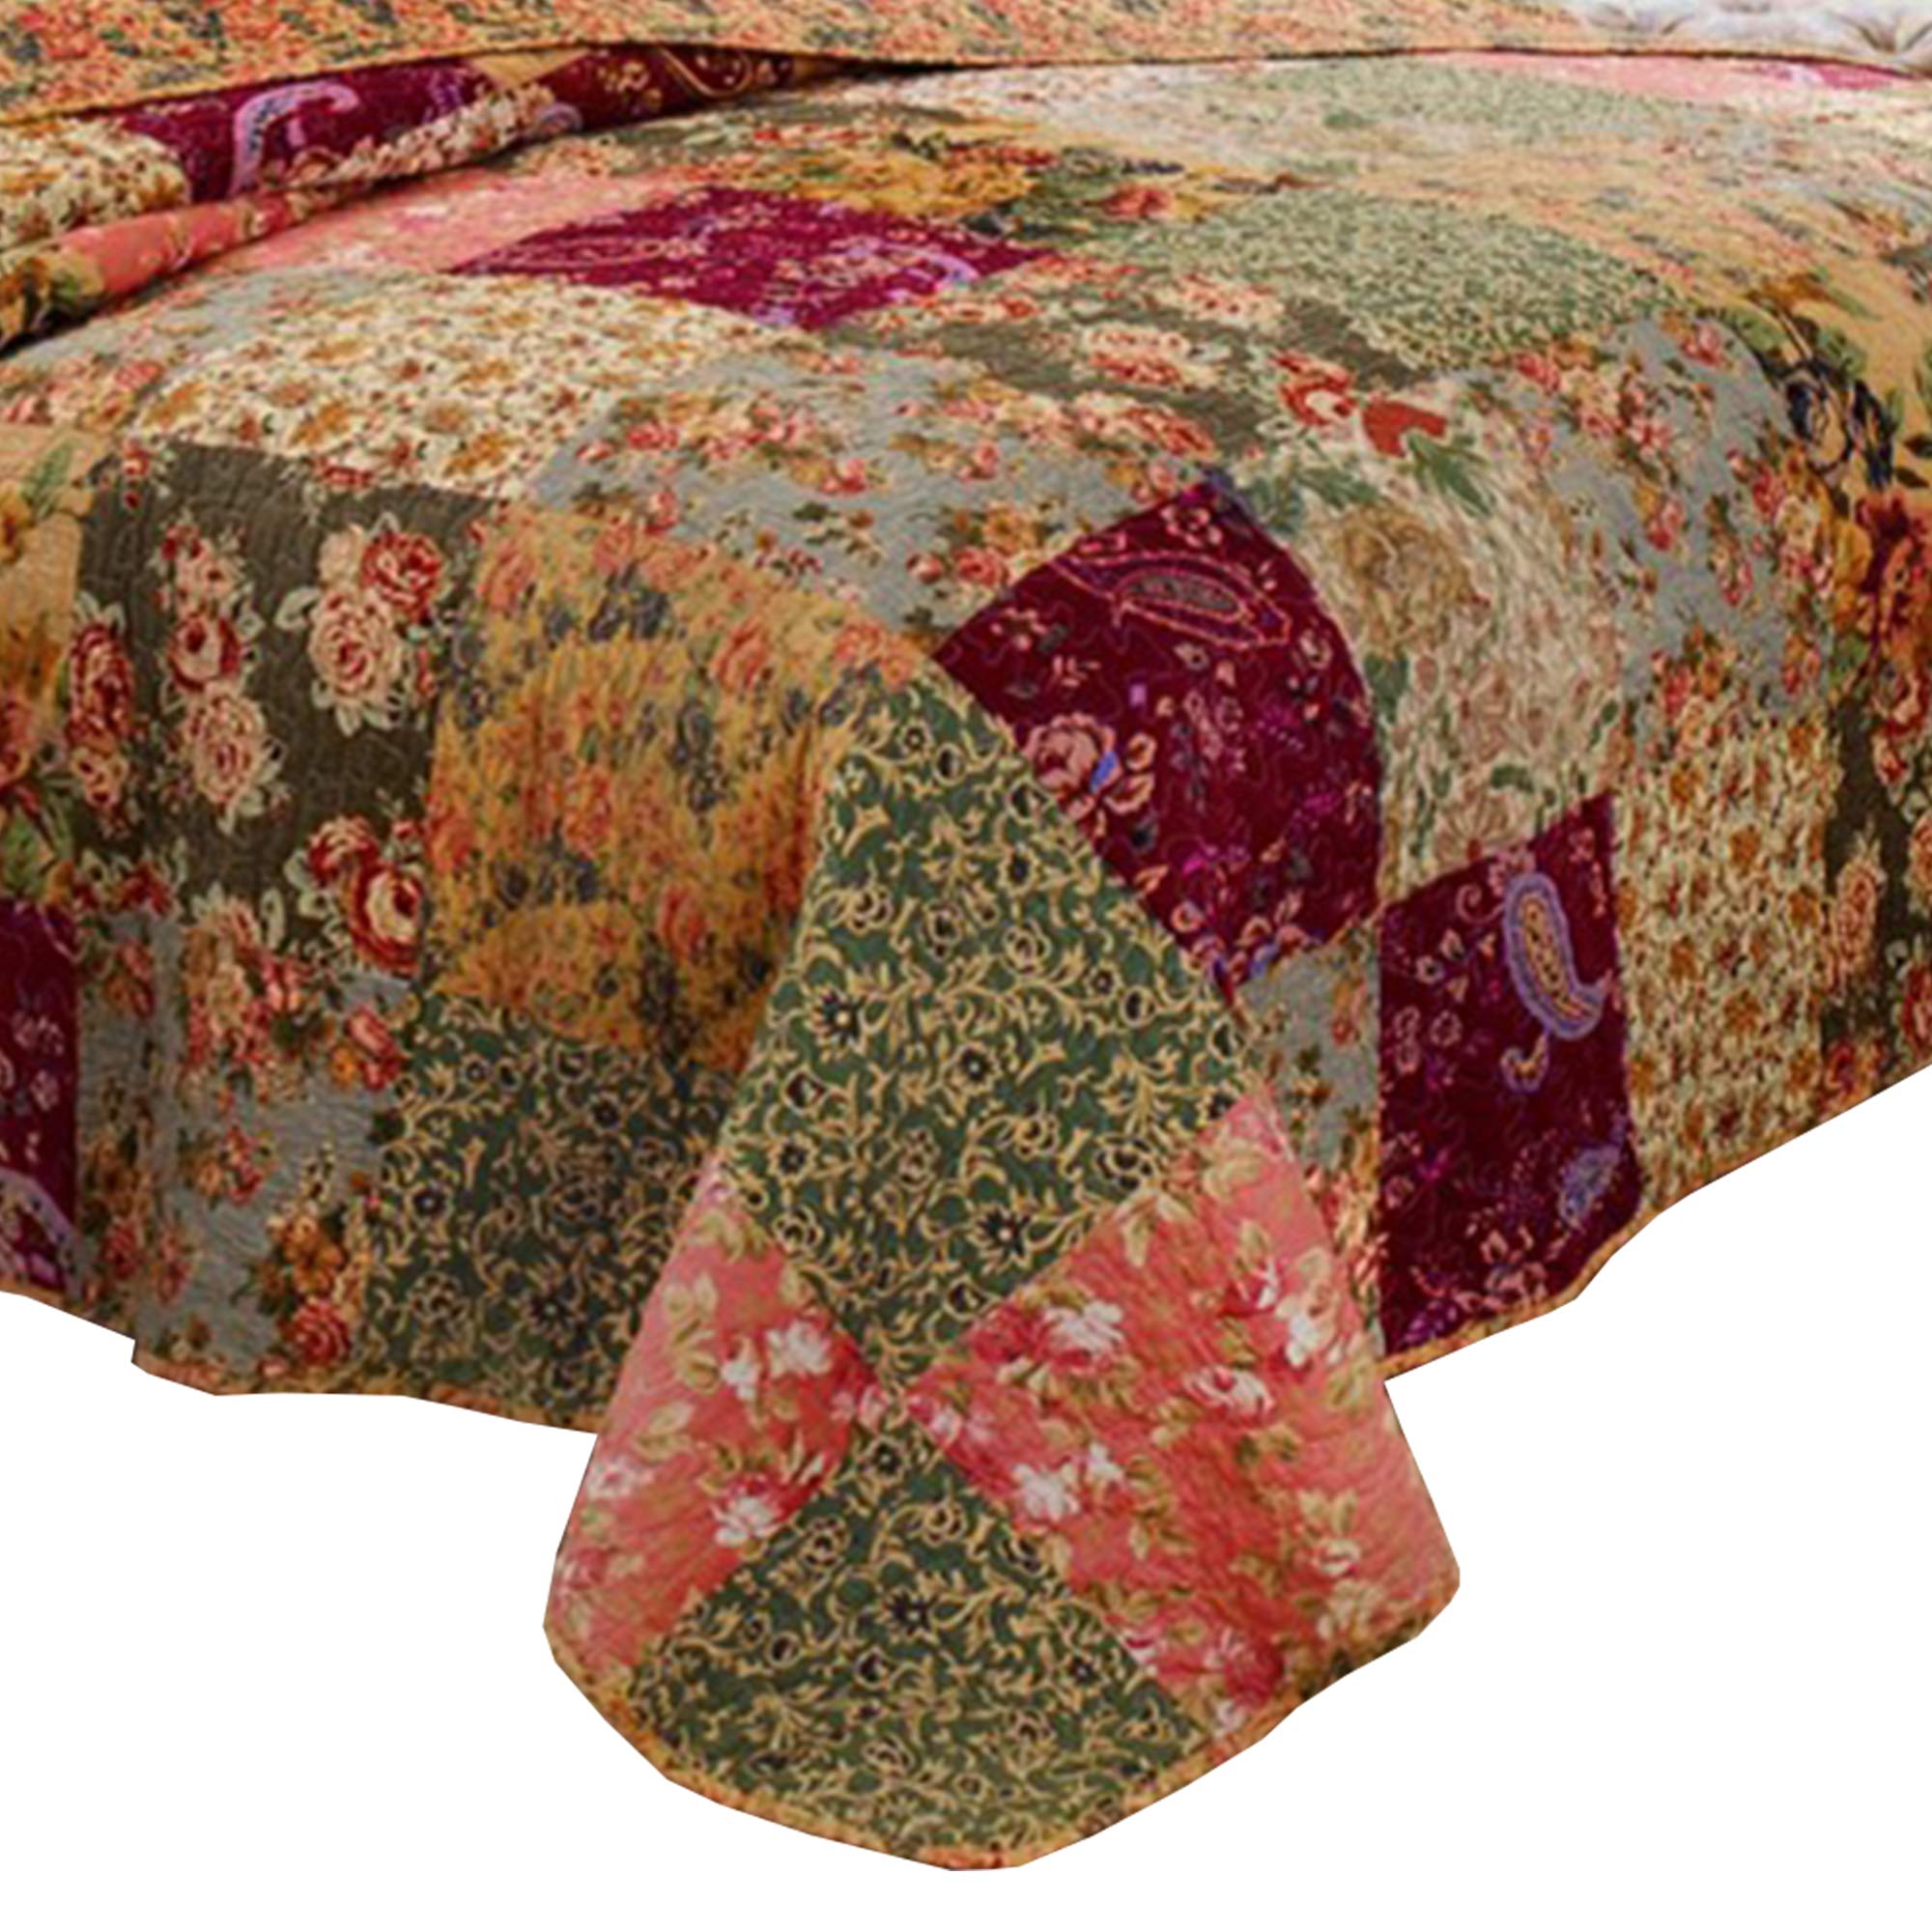 Benjara Kamet 3 Piece Fabric Queen Size Bedspread Set with Floral Prints, Multicolor